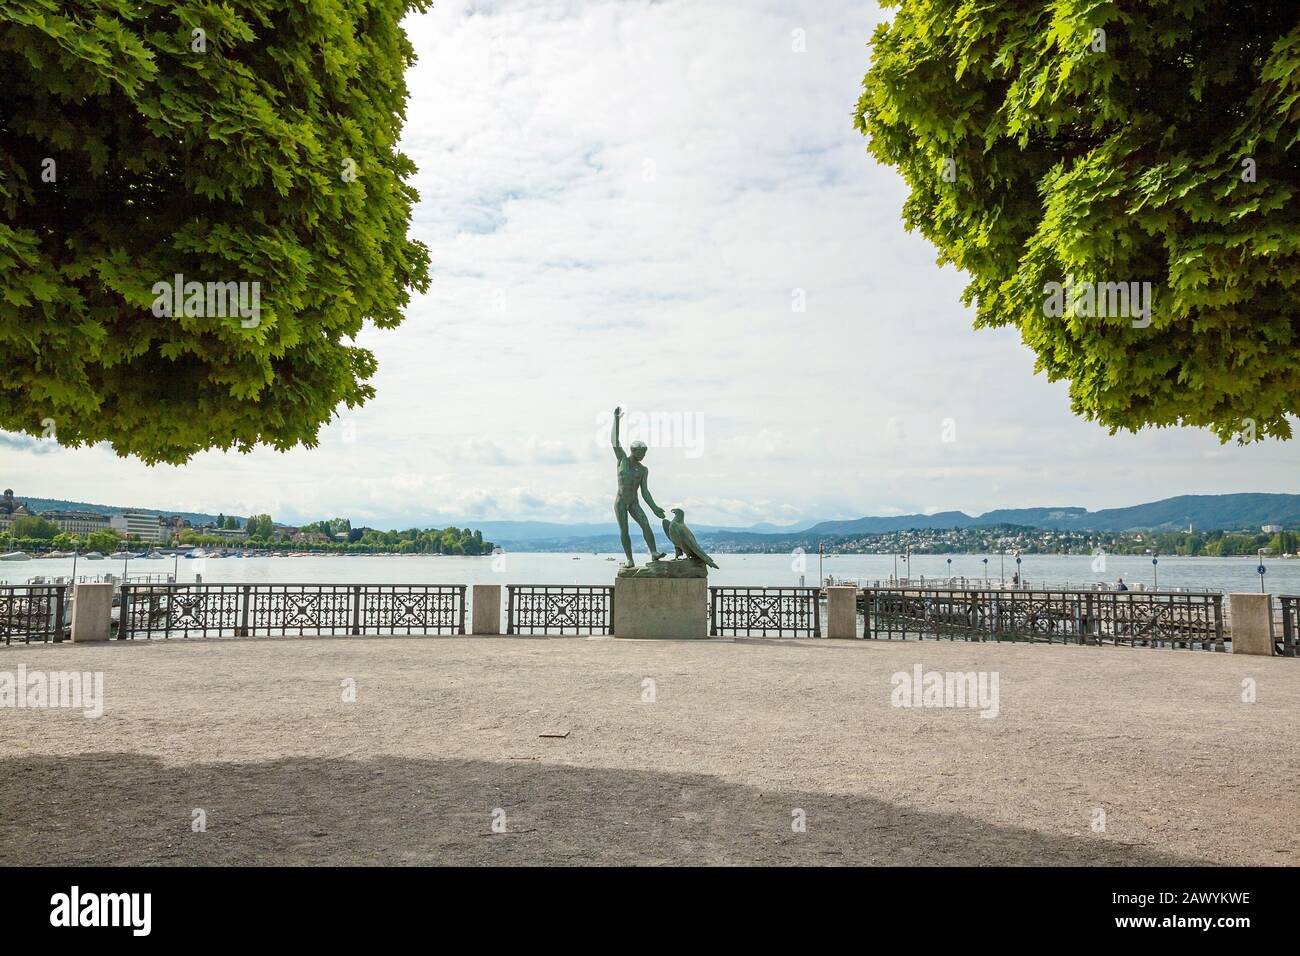 Zurich, Switzerland - June 10, 2017: Ganymed Statue (statue of a man and a eagle) in Zurich, Switzerland - Lake Zurich panorama in the background - wi Stock Photo